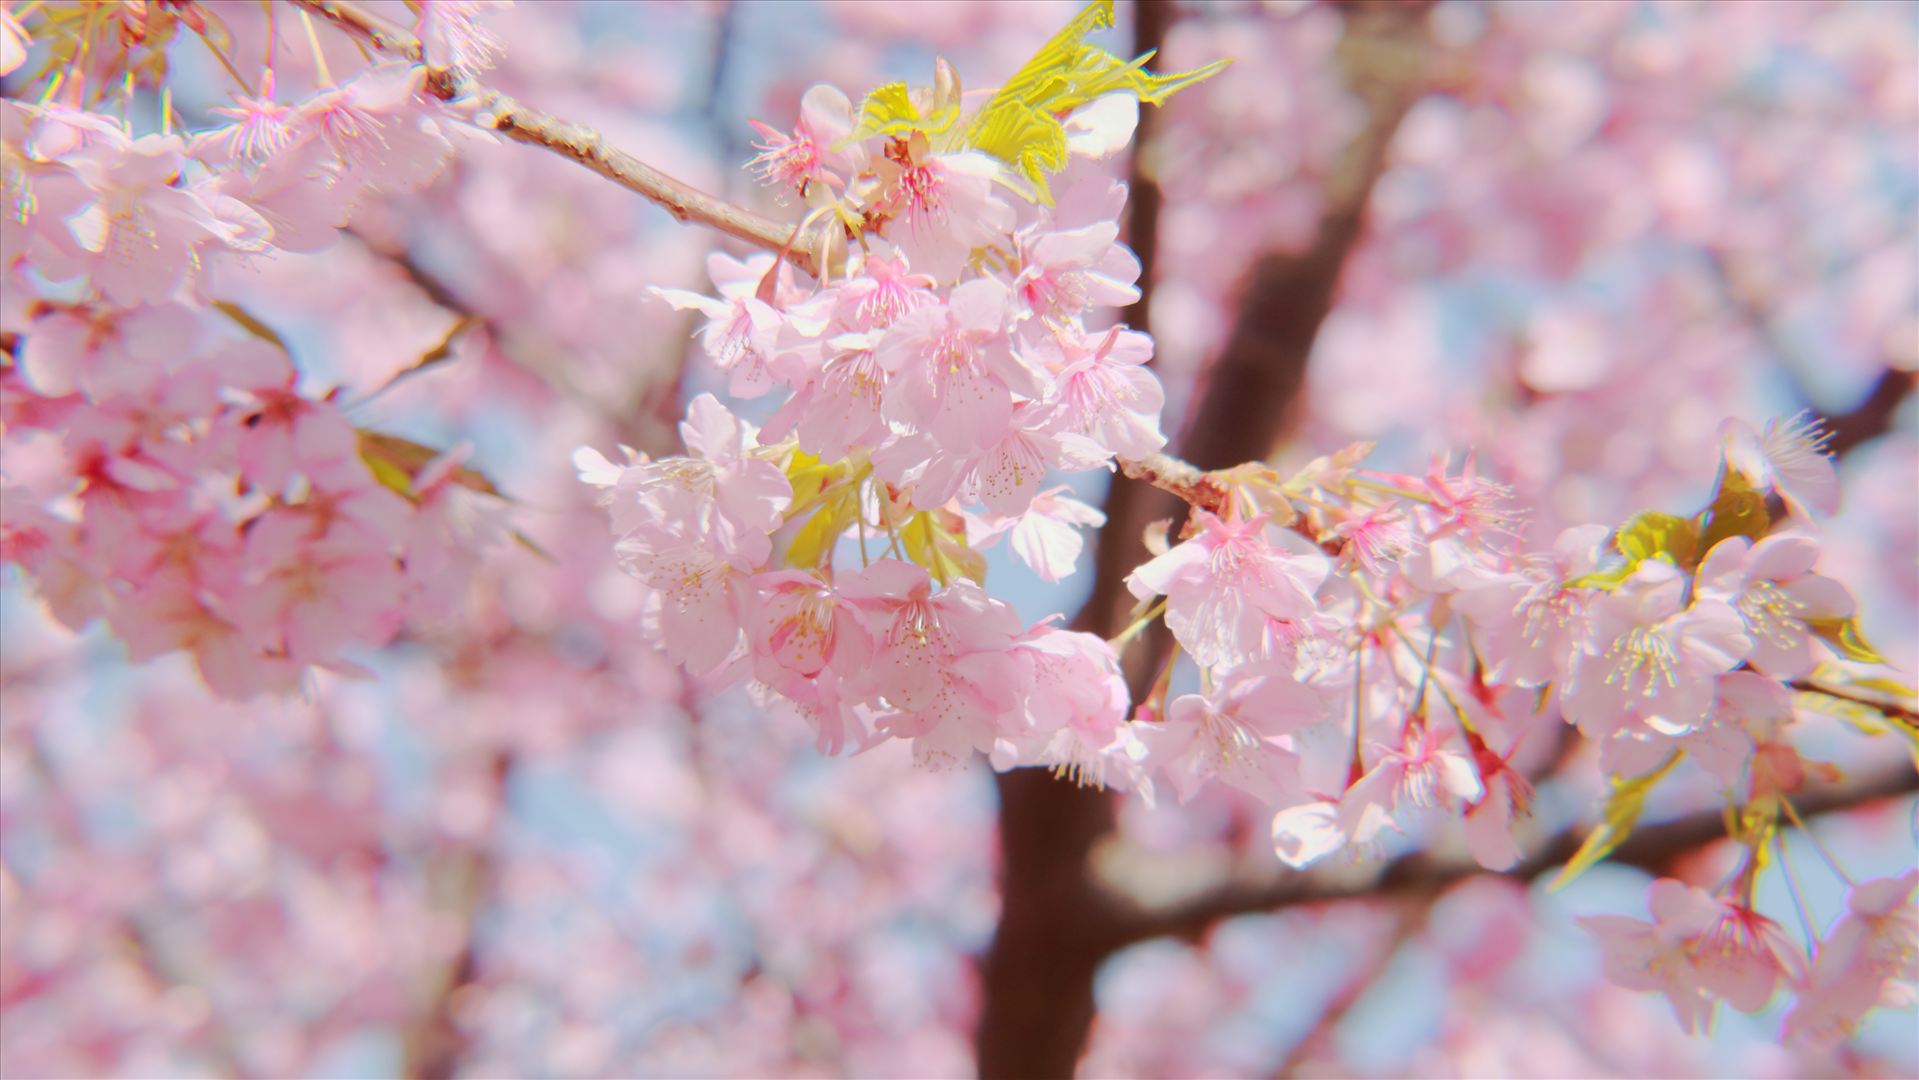 plum blossom.JPG - plum blossom by Goomba707